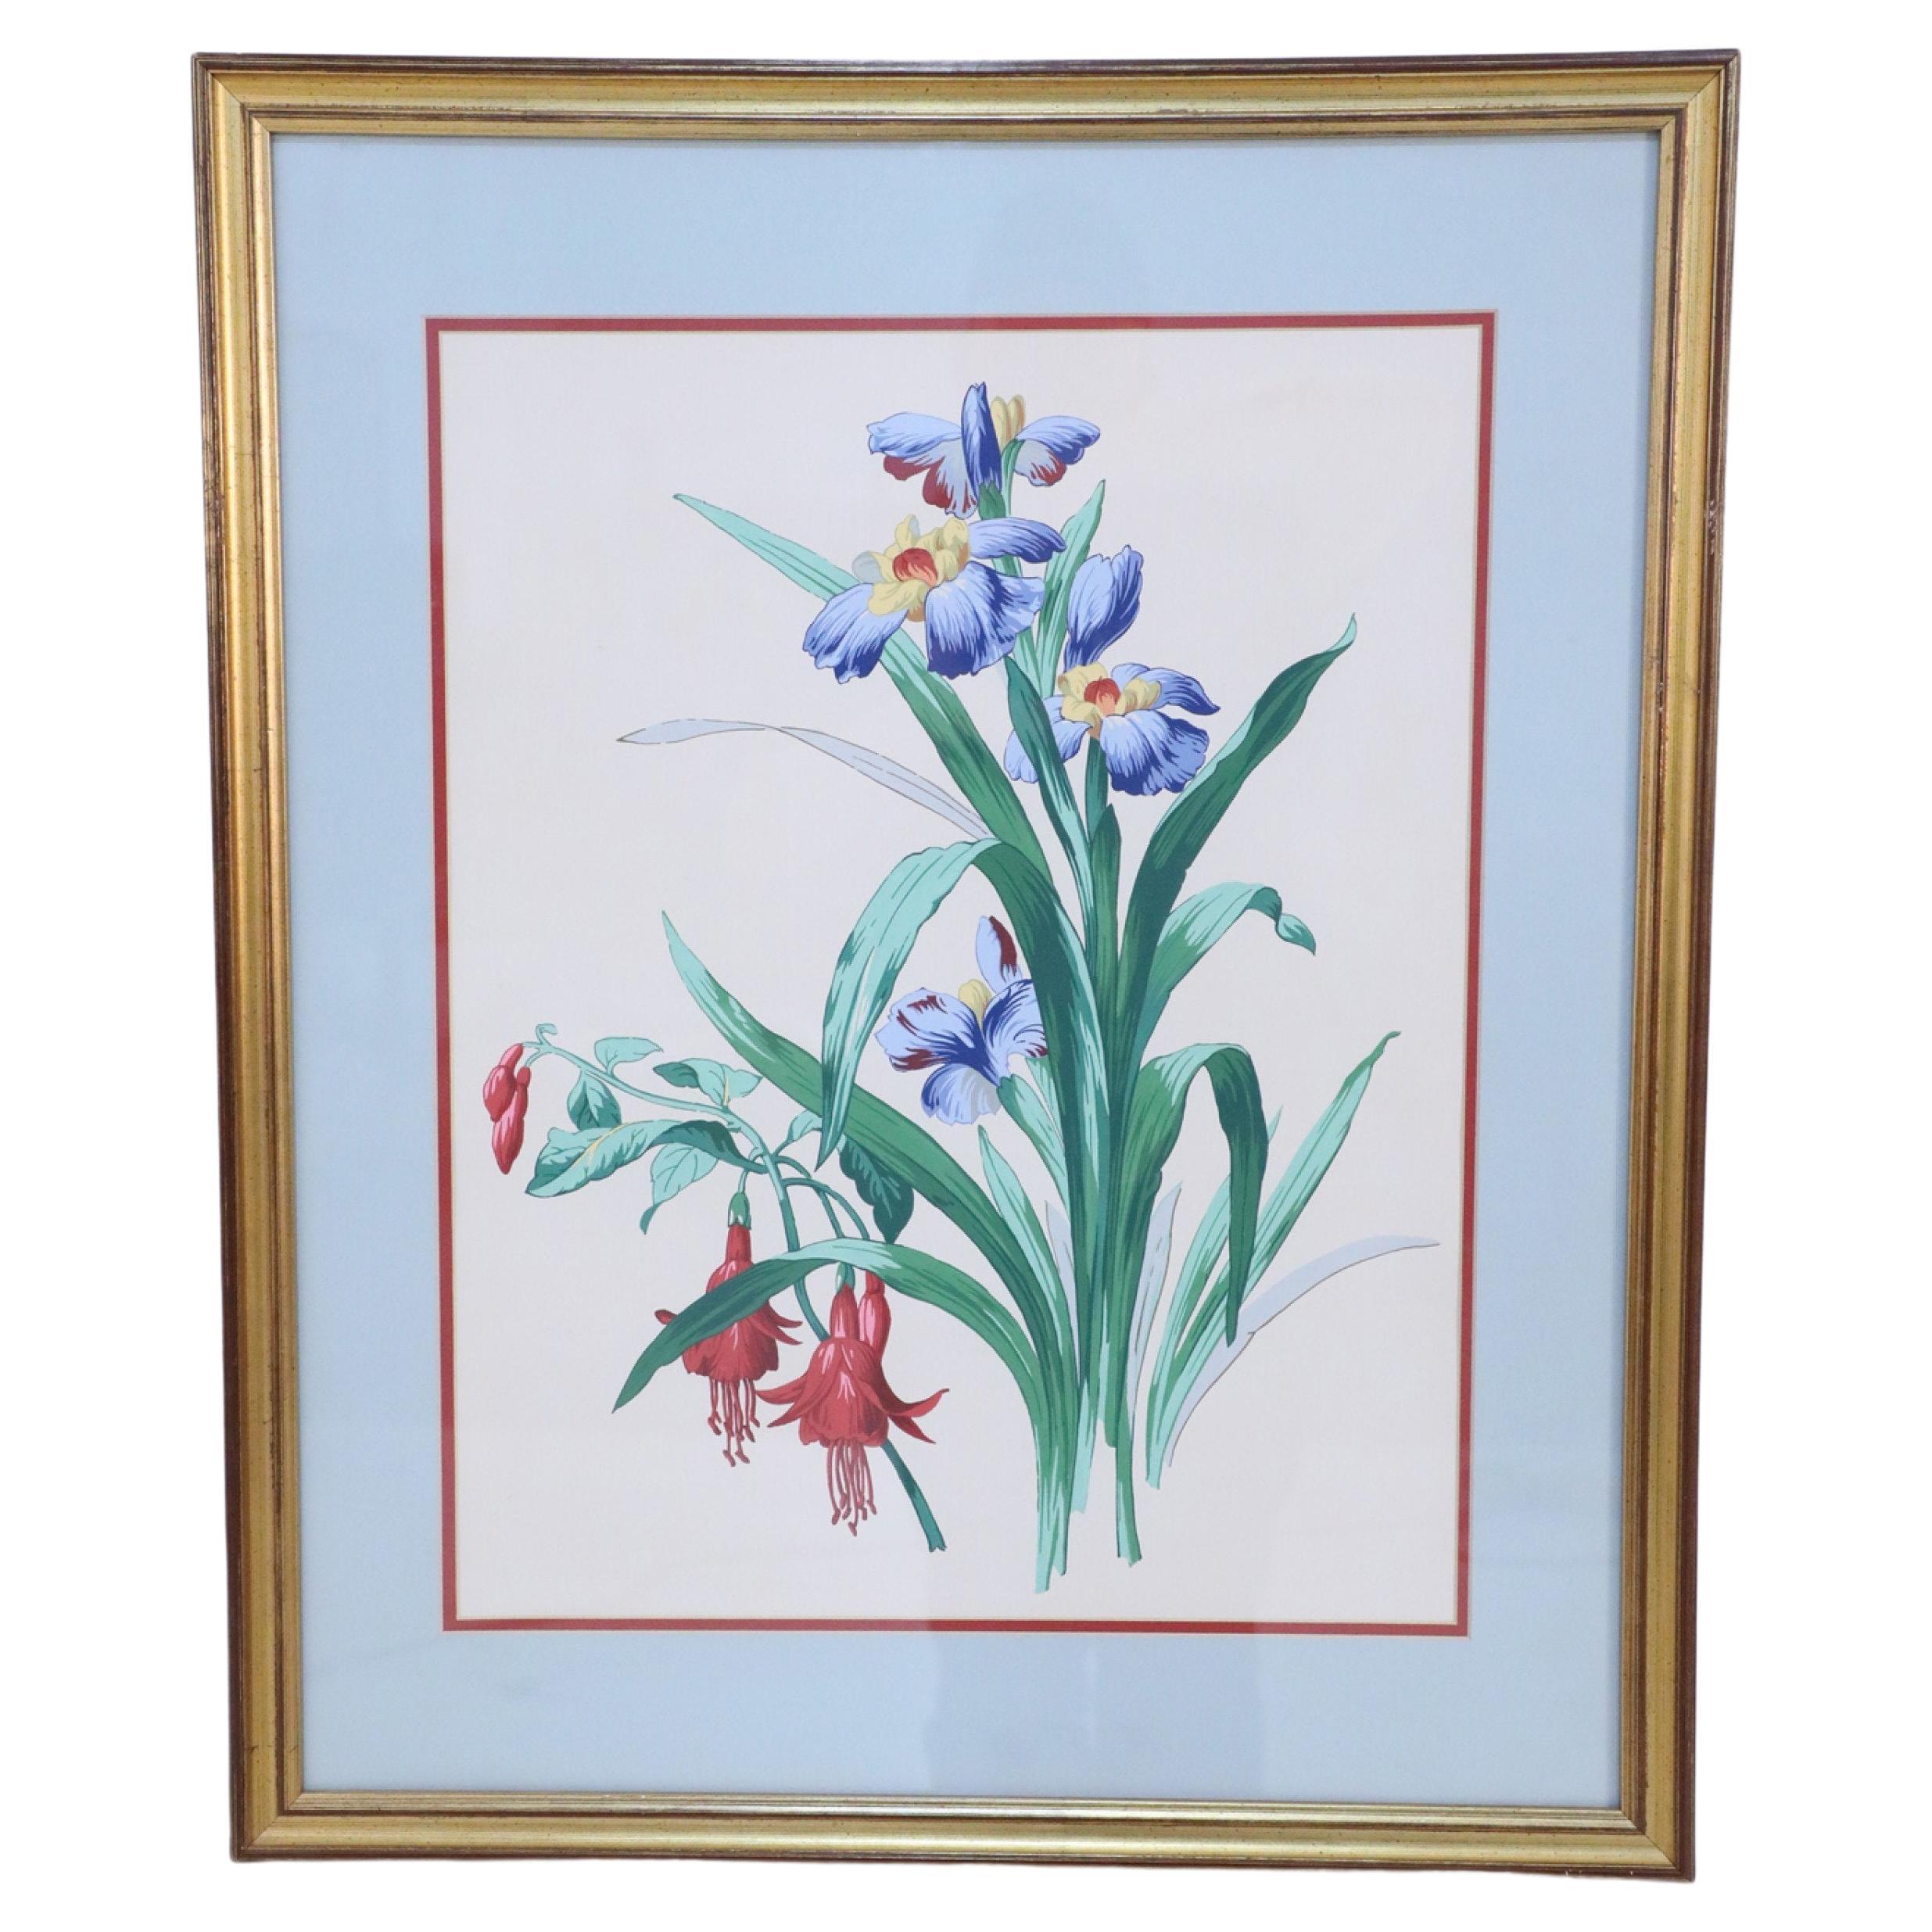 Framed Still Life Illustration of Blue and Yellow Irises